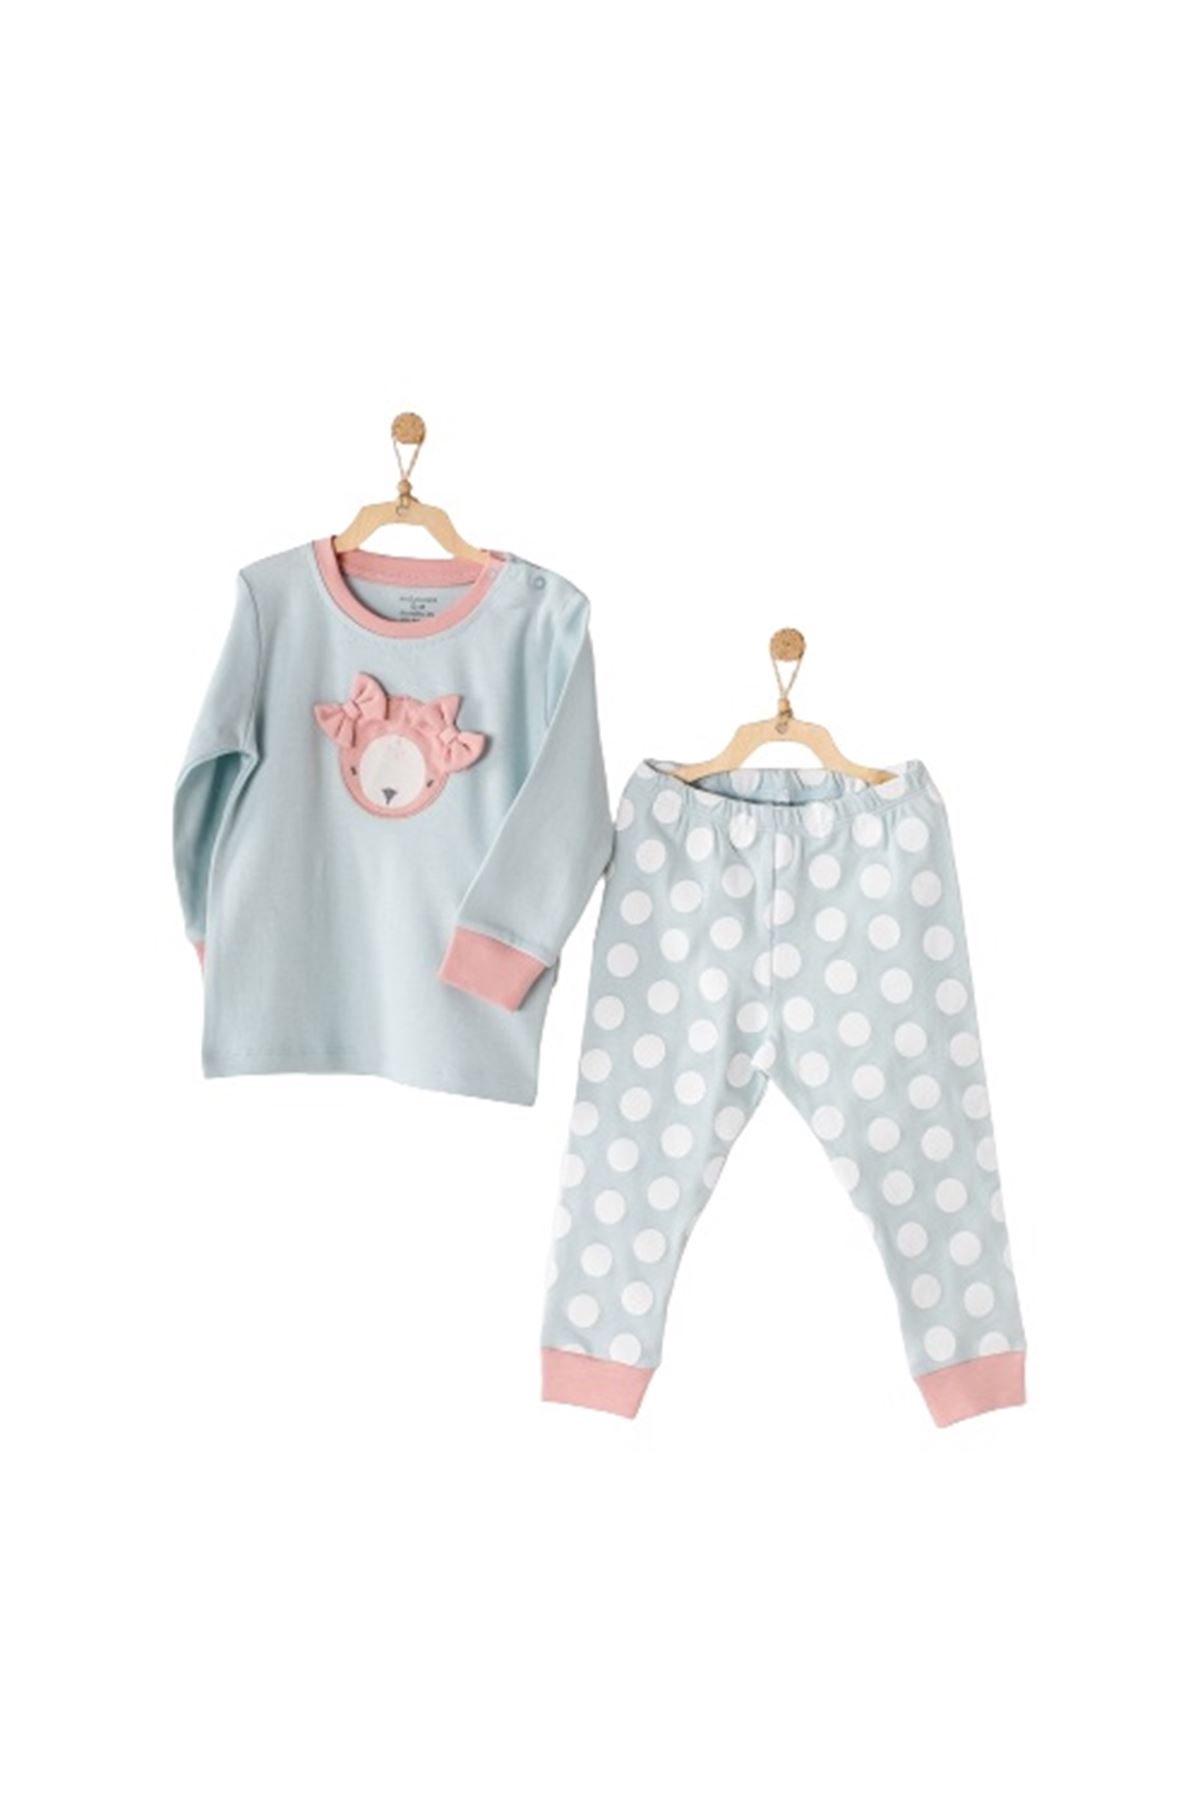 Andywawa AC23393 Pajamas 2Li Pijama Mint